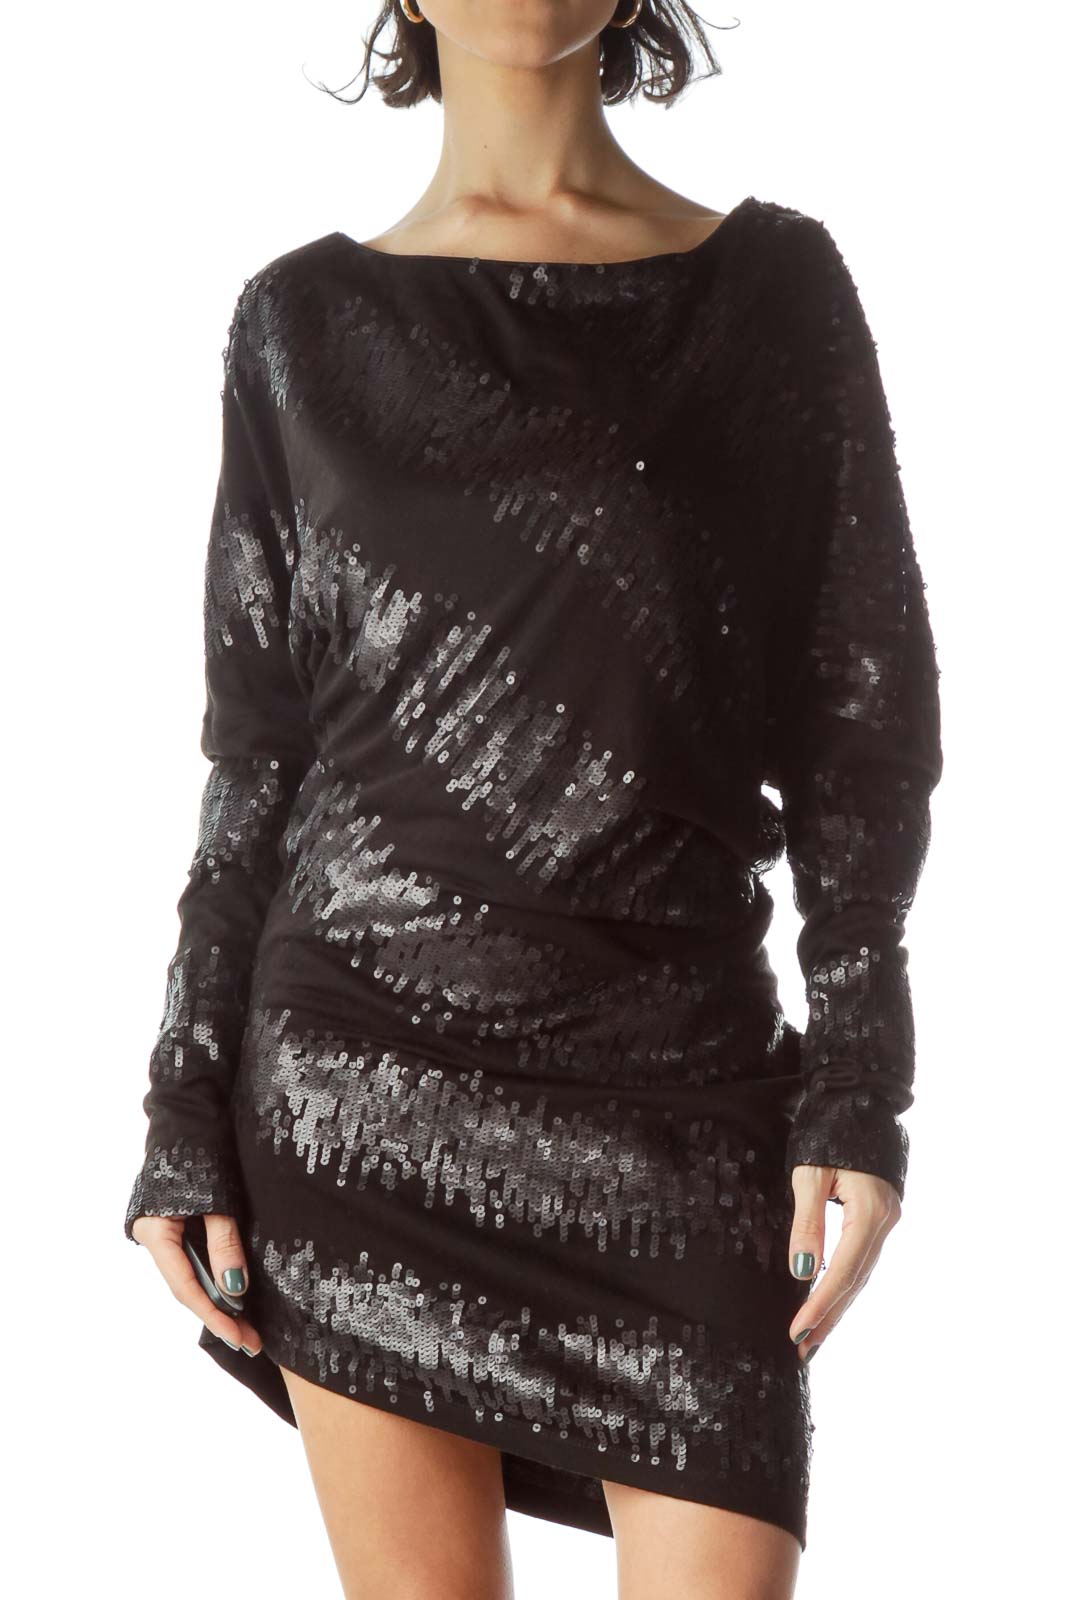 Black Bat Sleeve Sequin Dress Front